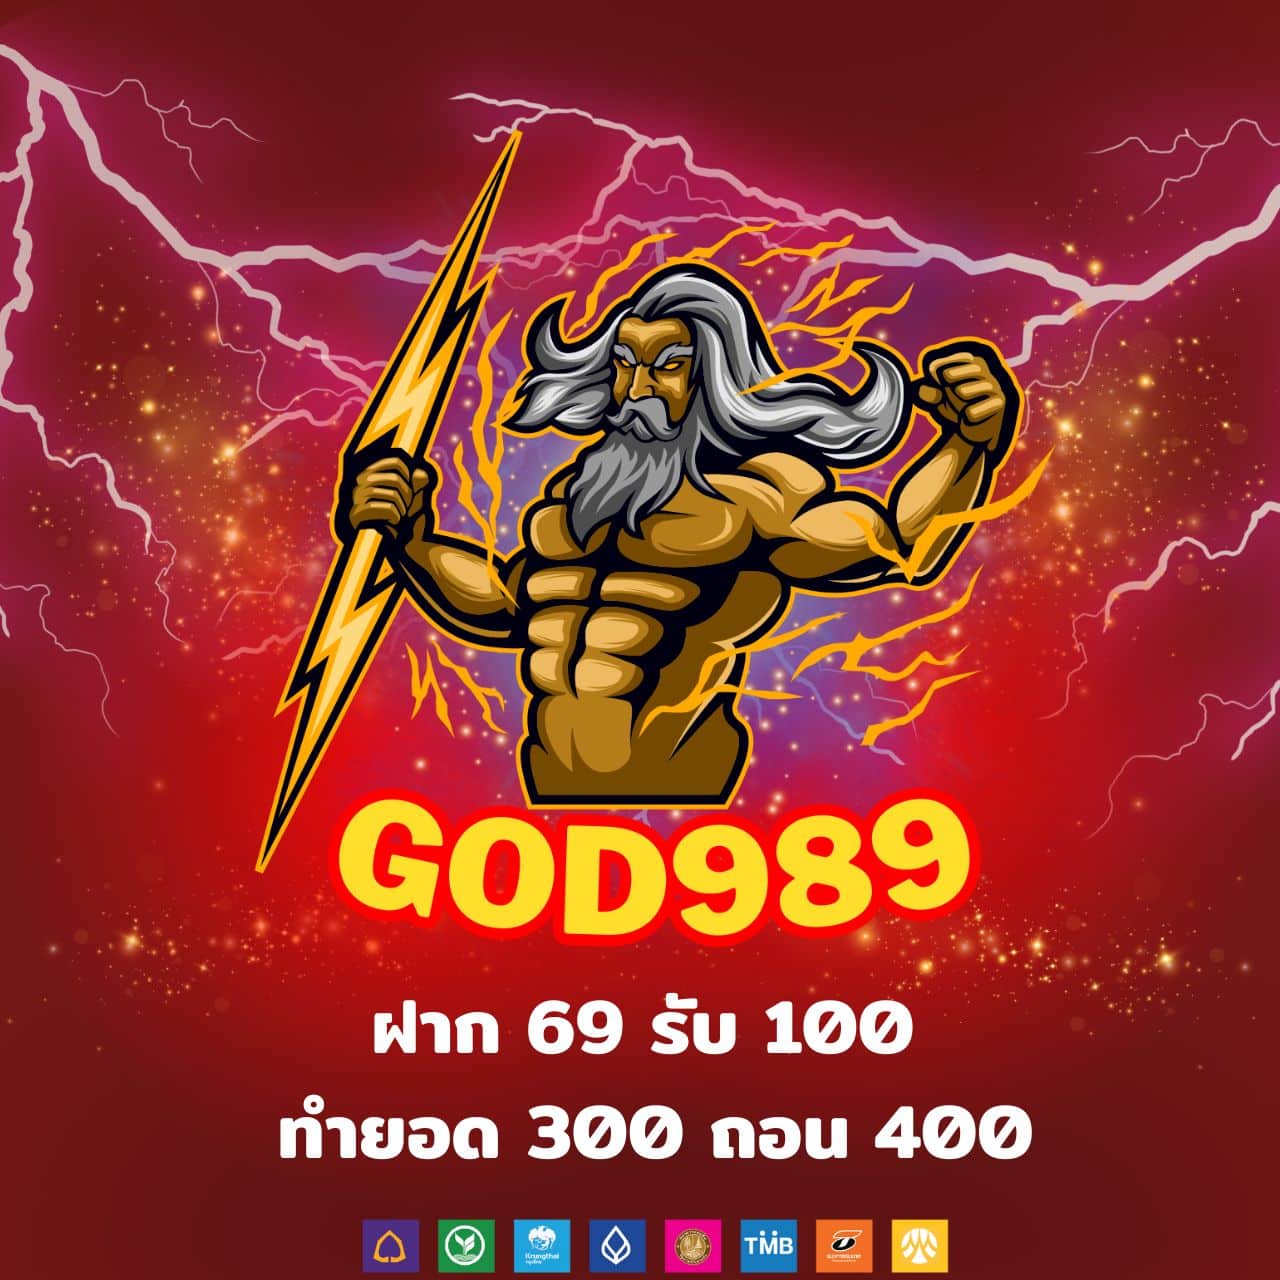 GODZY989 Homepage banner 5